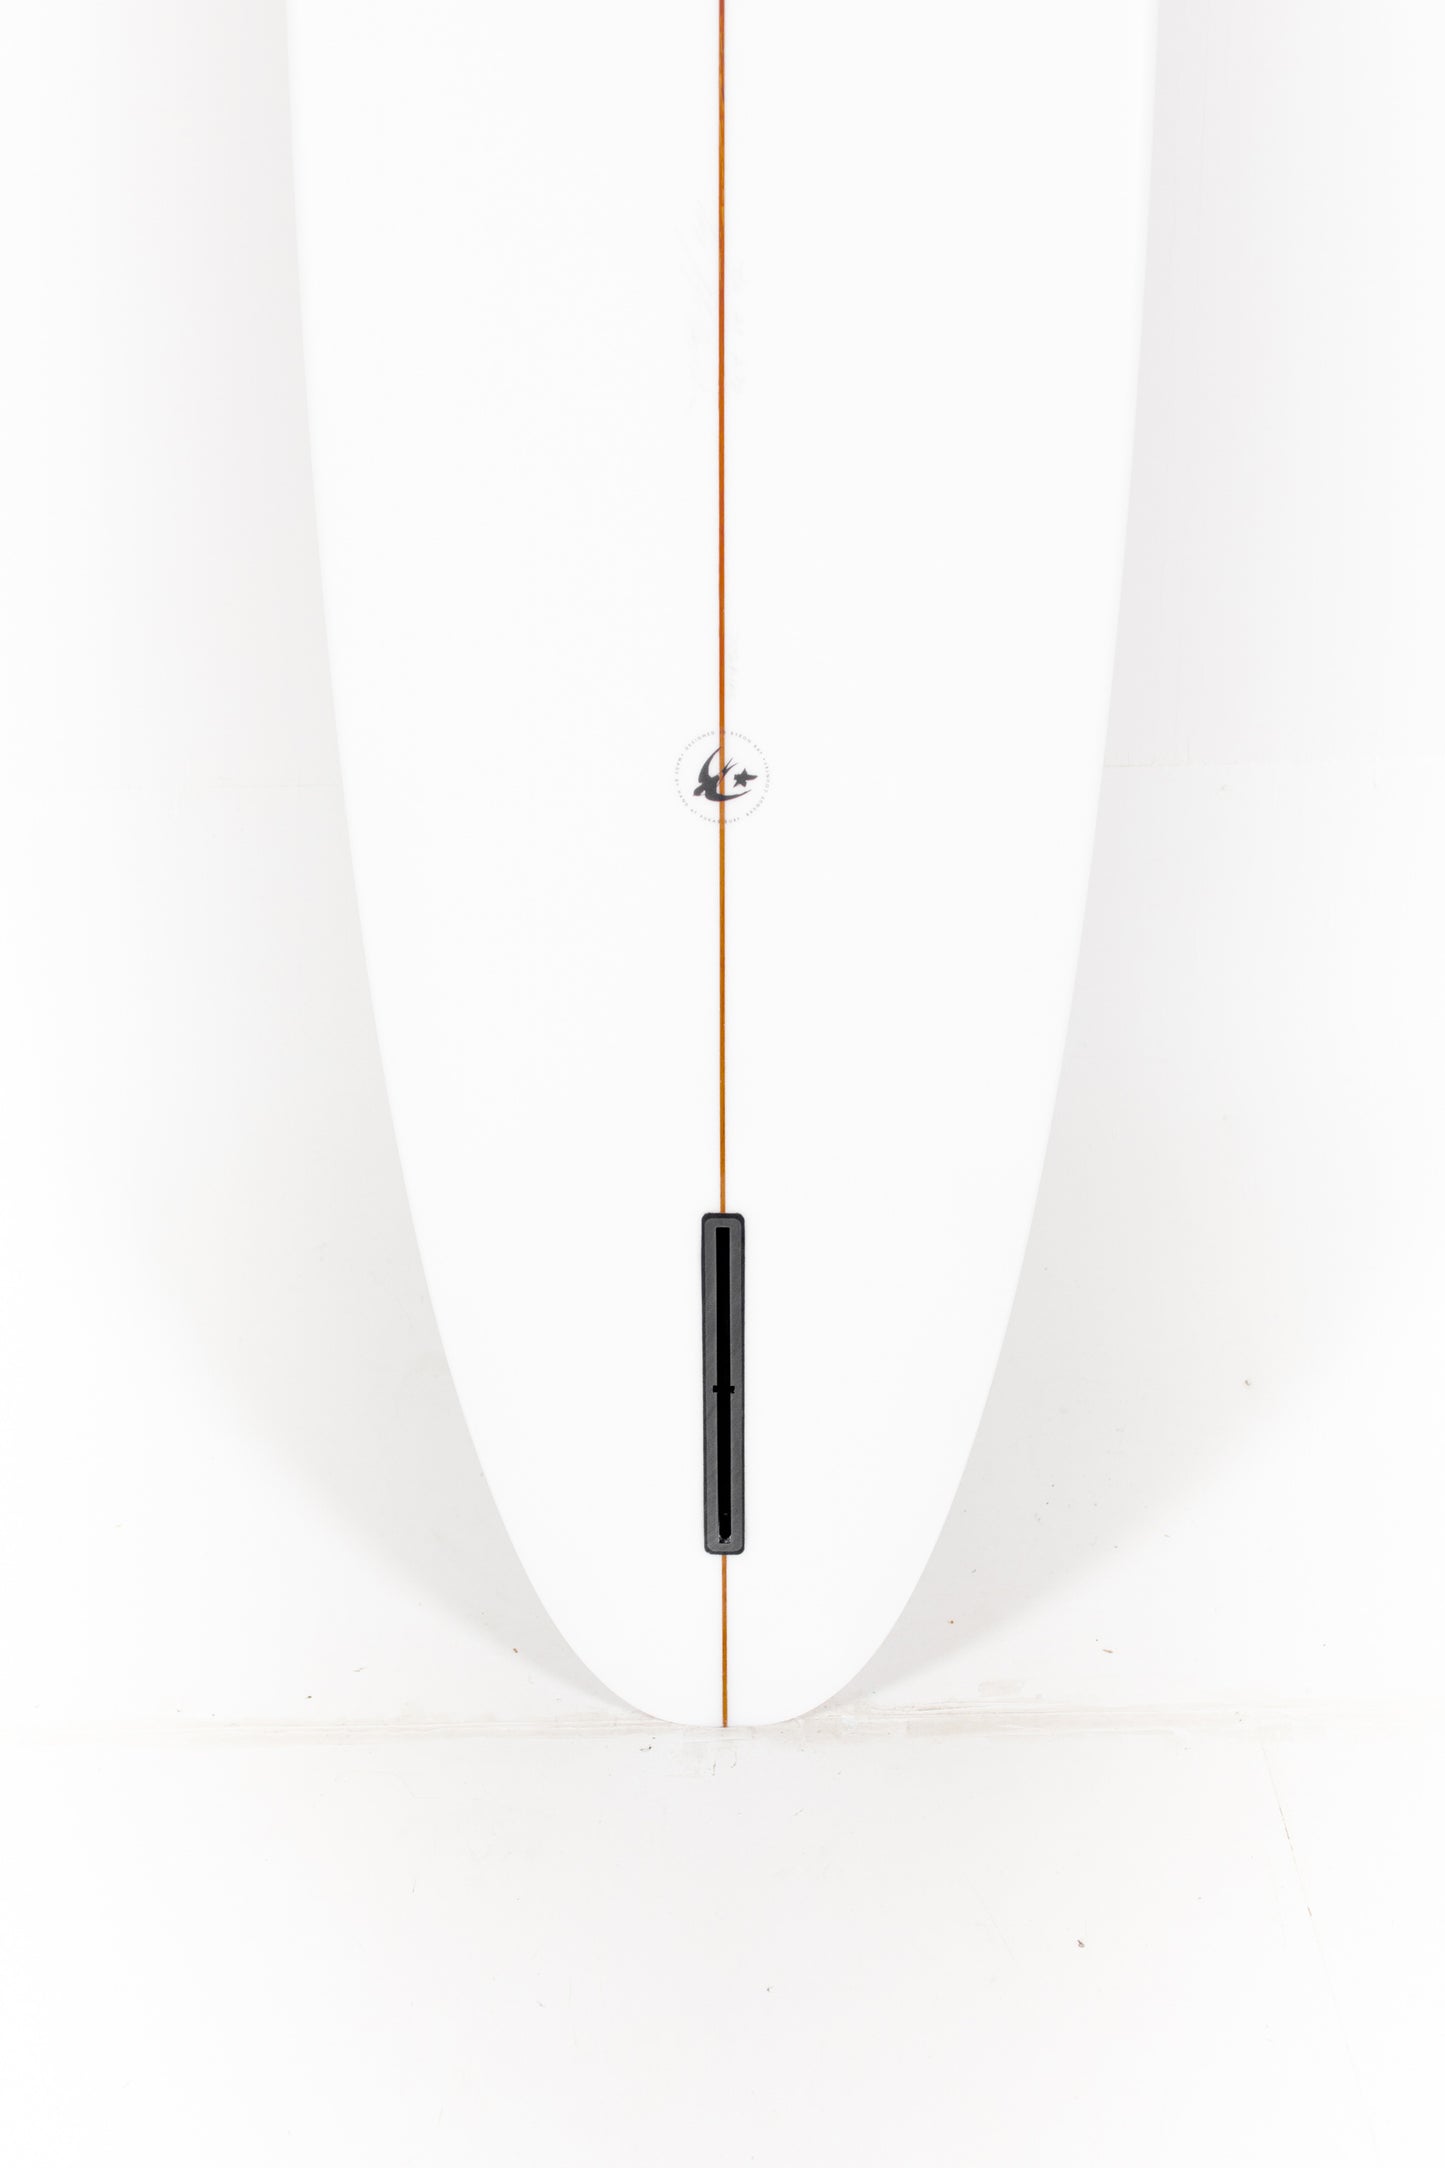 
                  
                    Pukas Surf Shop - McTavish Surfboard - RINCON by Bob McTavish - 7’2” x 21 x 2 7/8 - Ref BM00775
                  
                